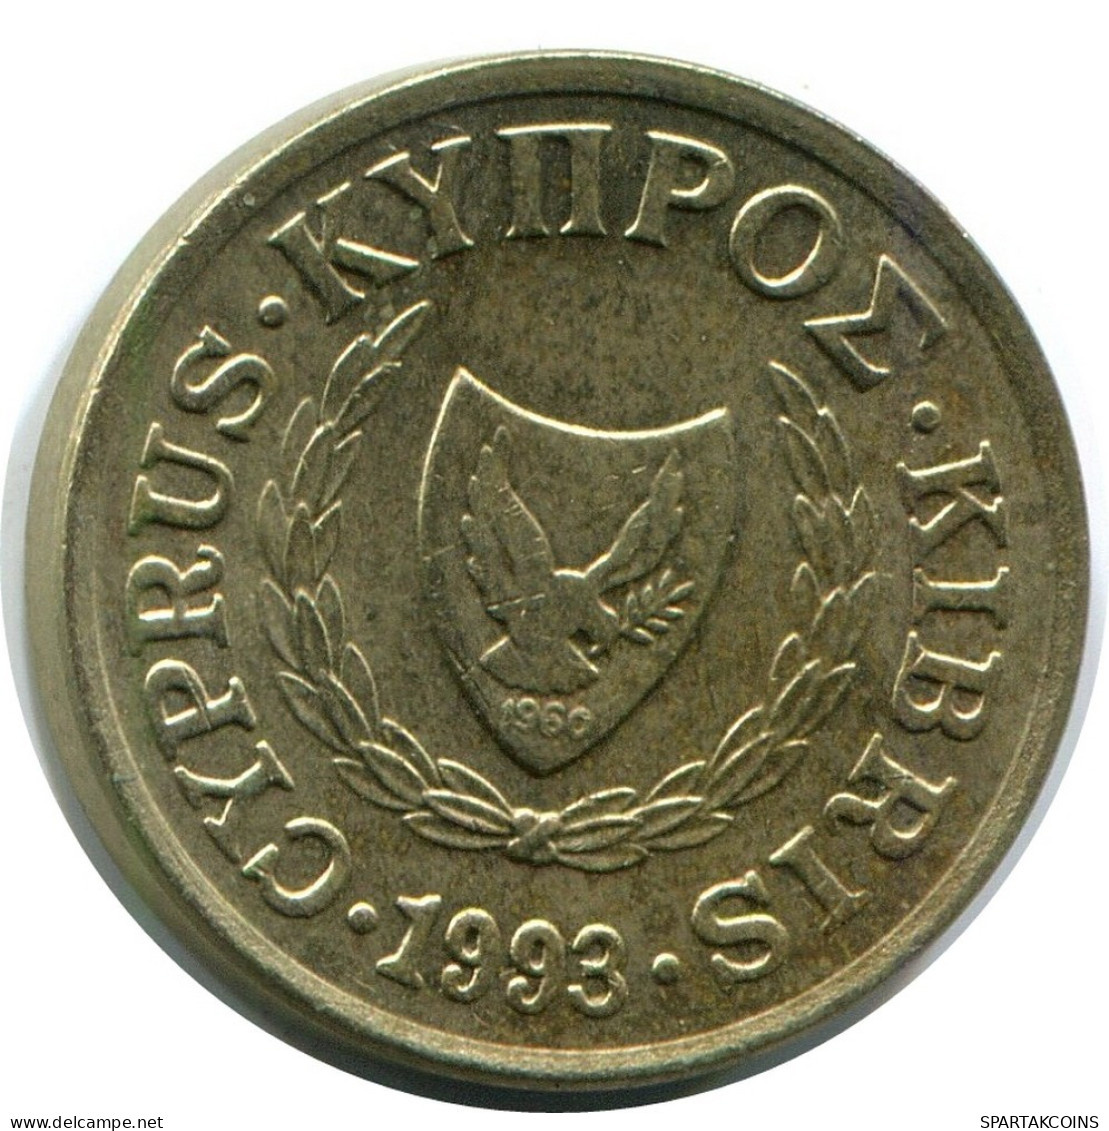 1 CENT 1993 CYPRUS Coin #AR933.U.A - Cyprus